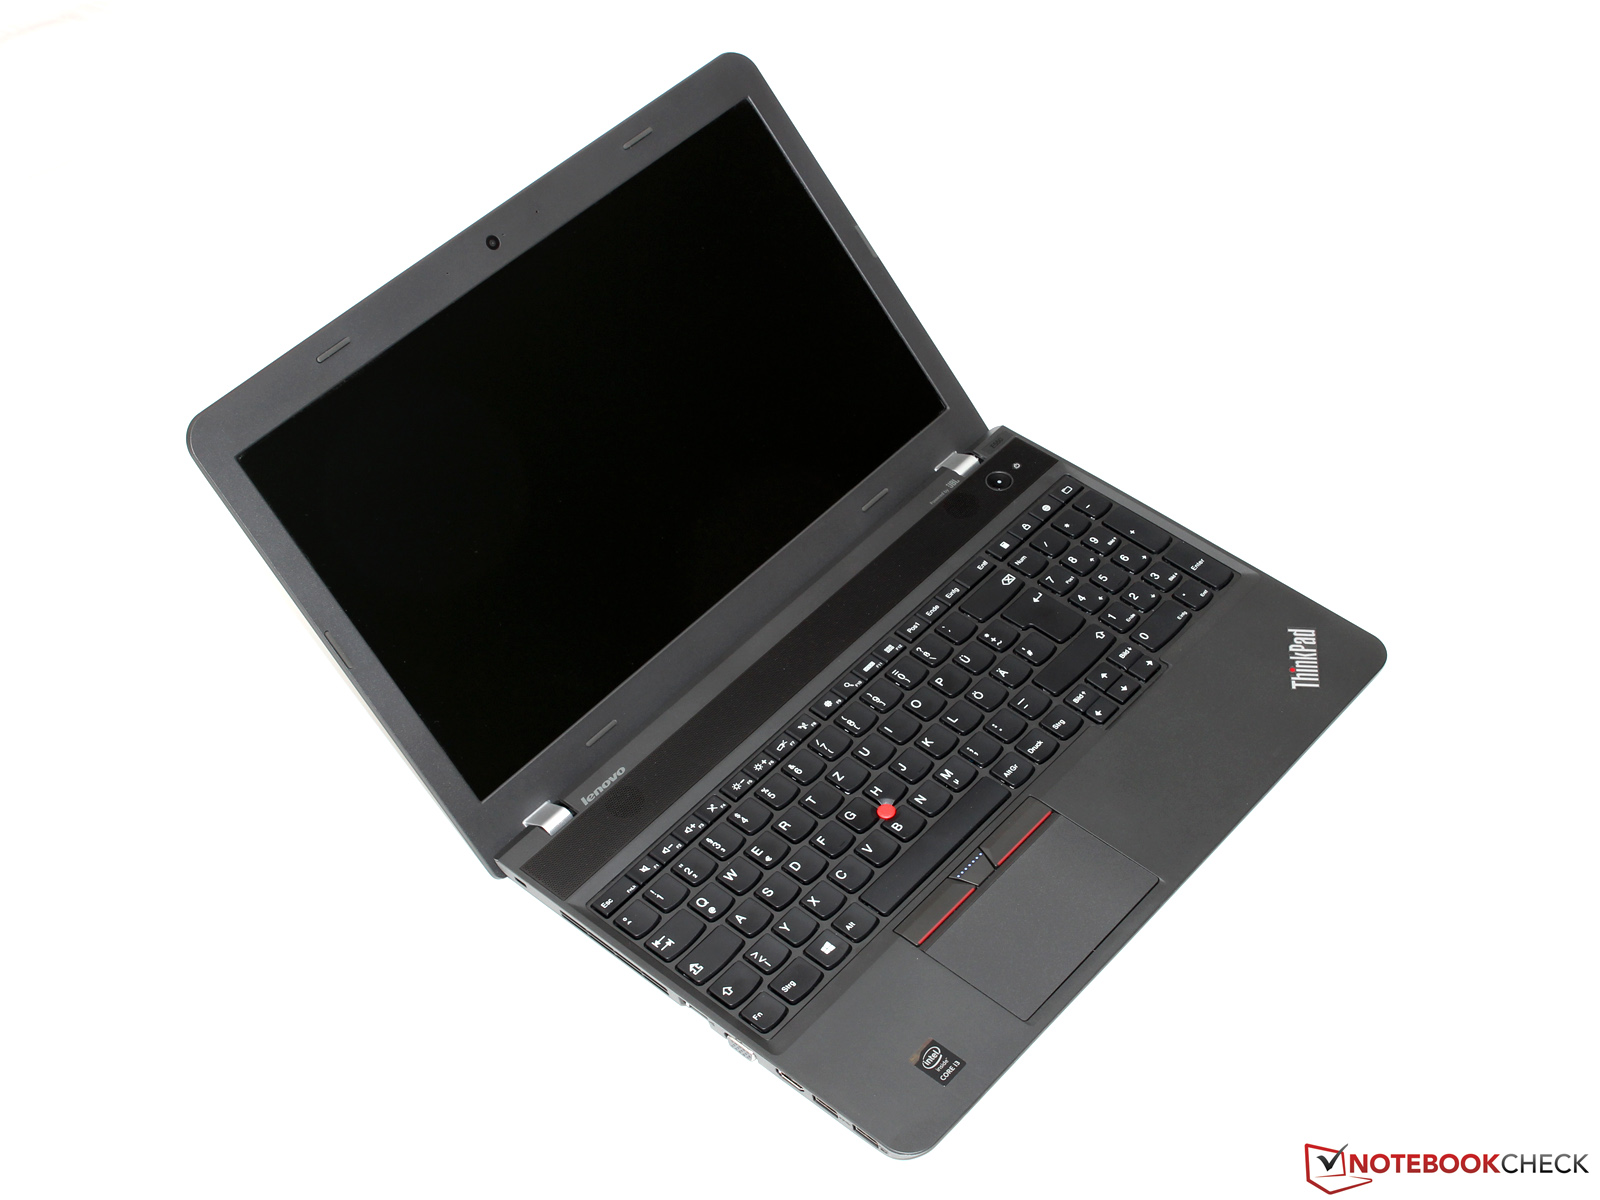 Breve análisis del Lenovo ThinkPad E550 (Core i7, Radeon R7 M265) - Notebookcheck.org